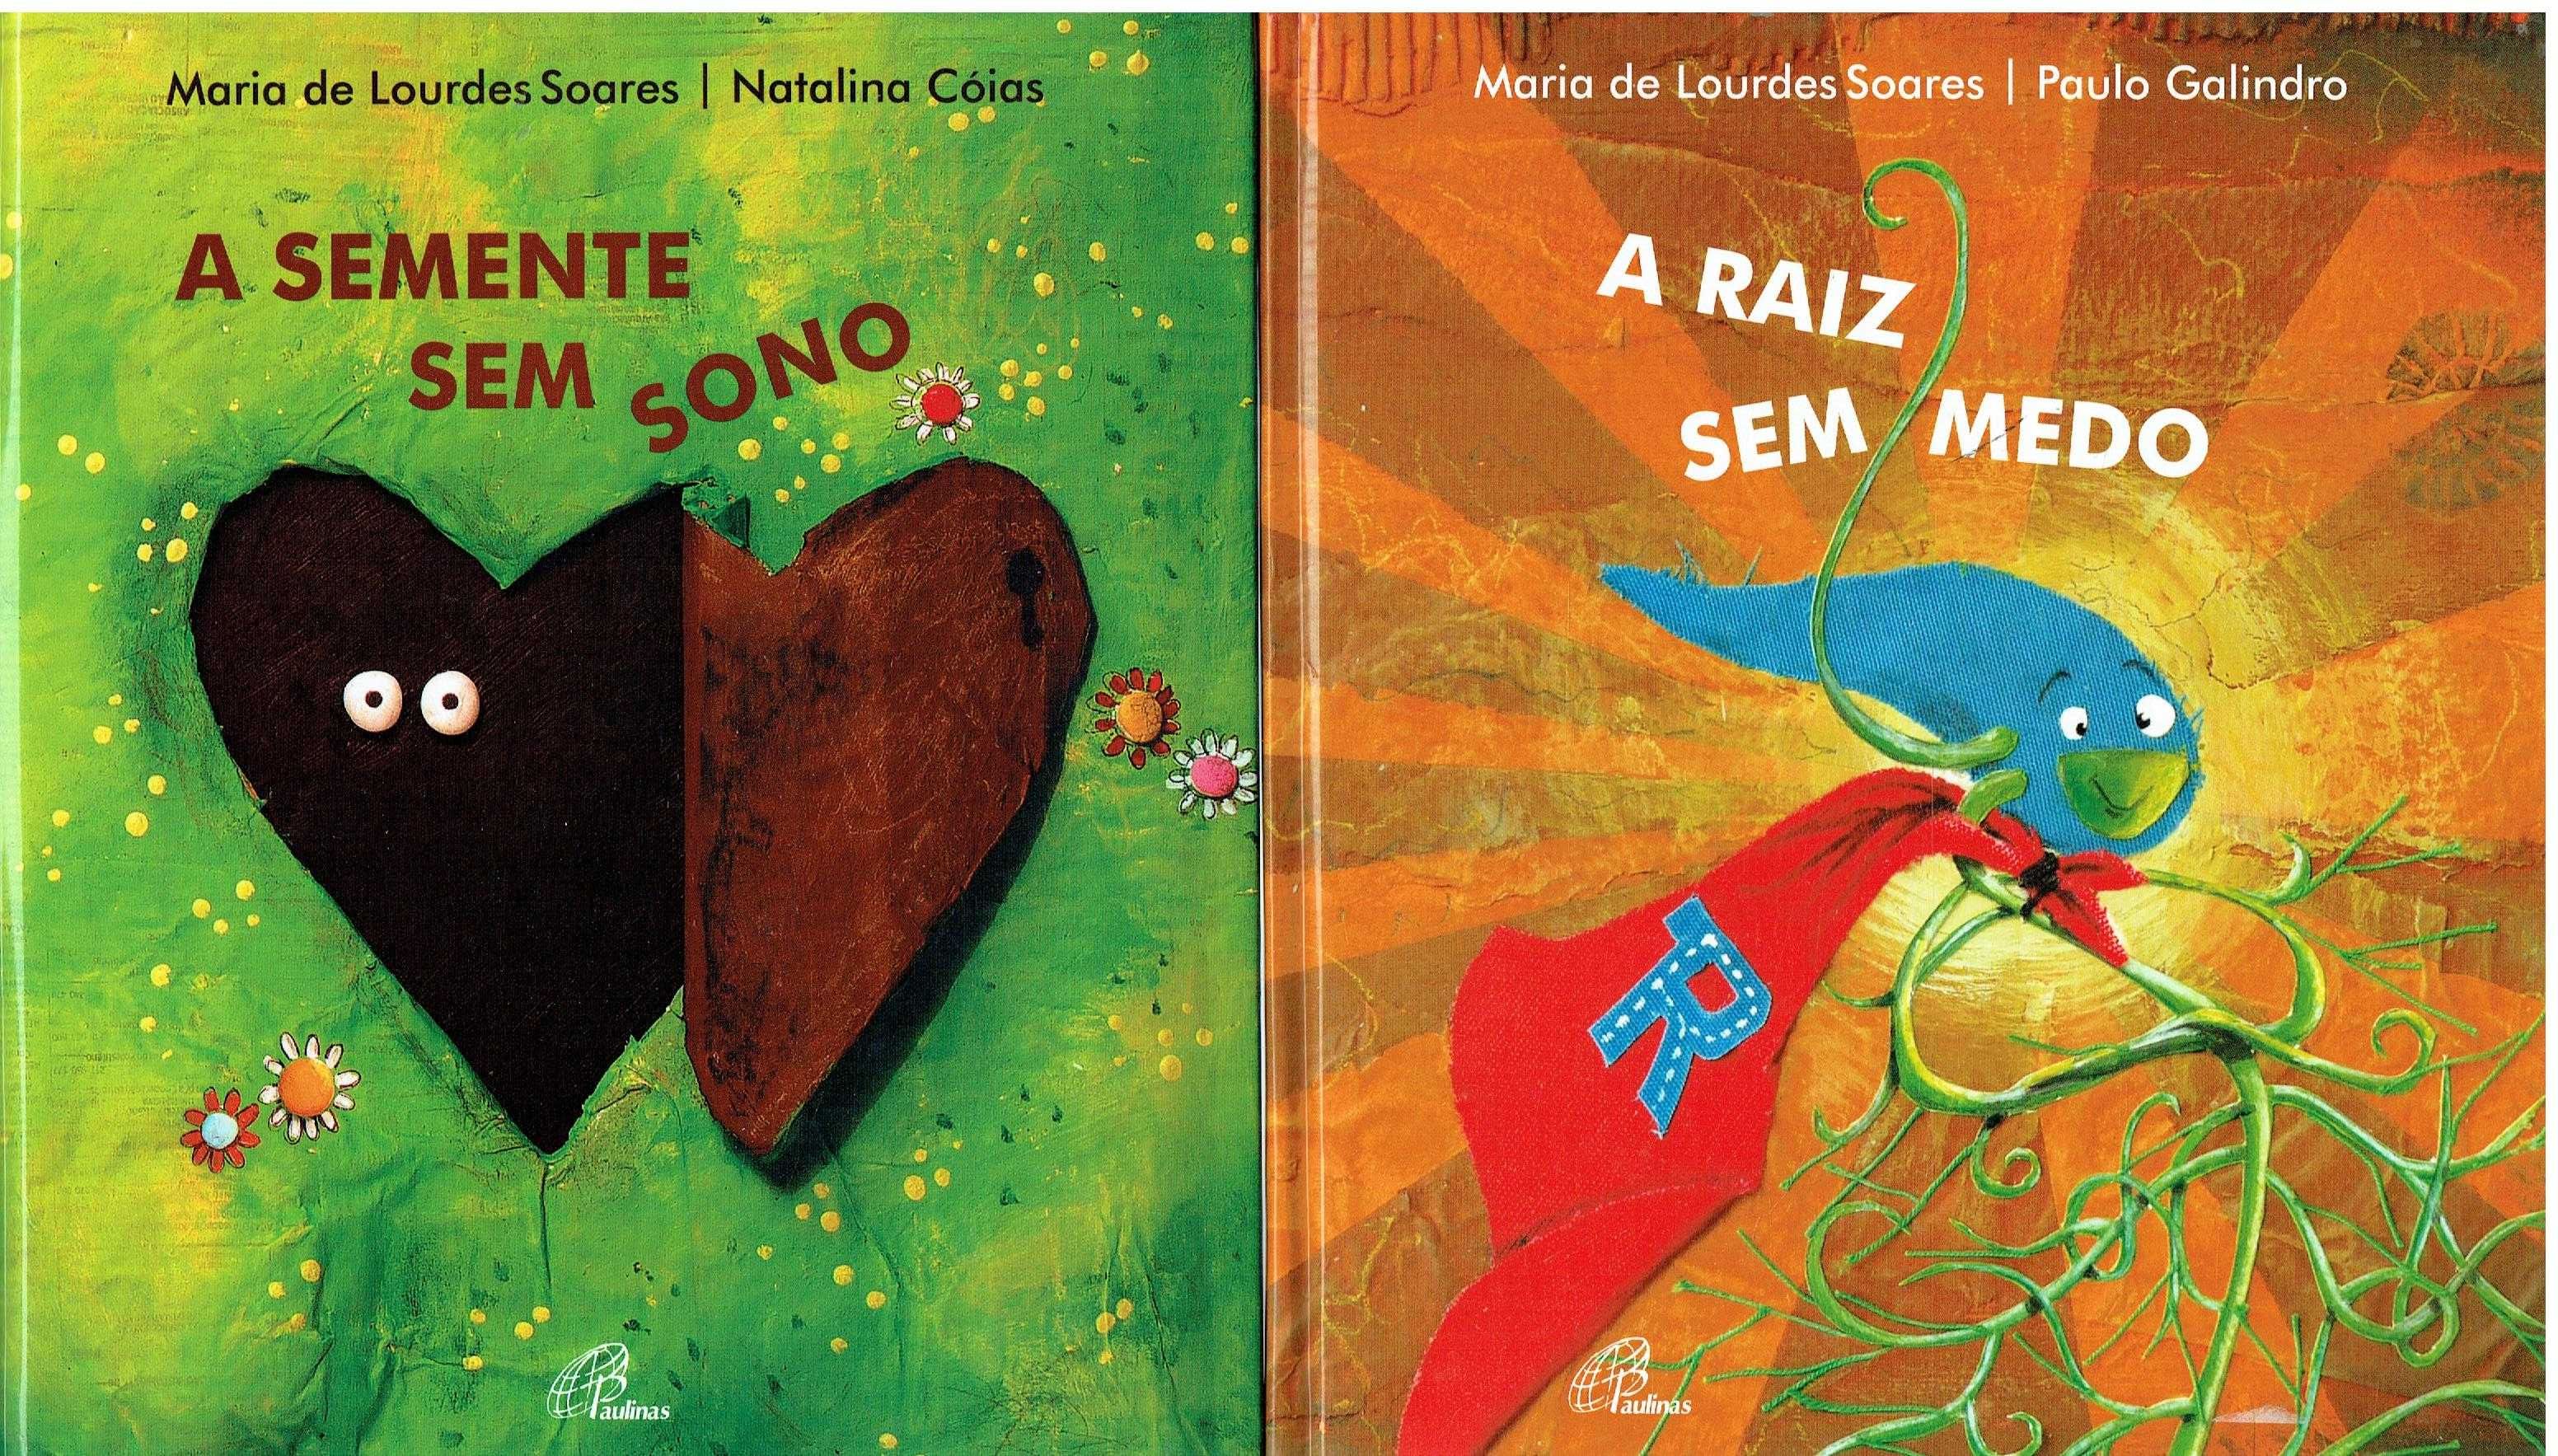 8019 - Literatura Infantil - Livros das Edições Paulistas